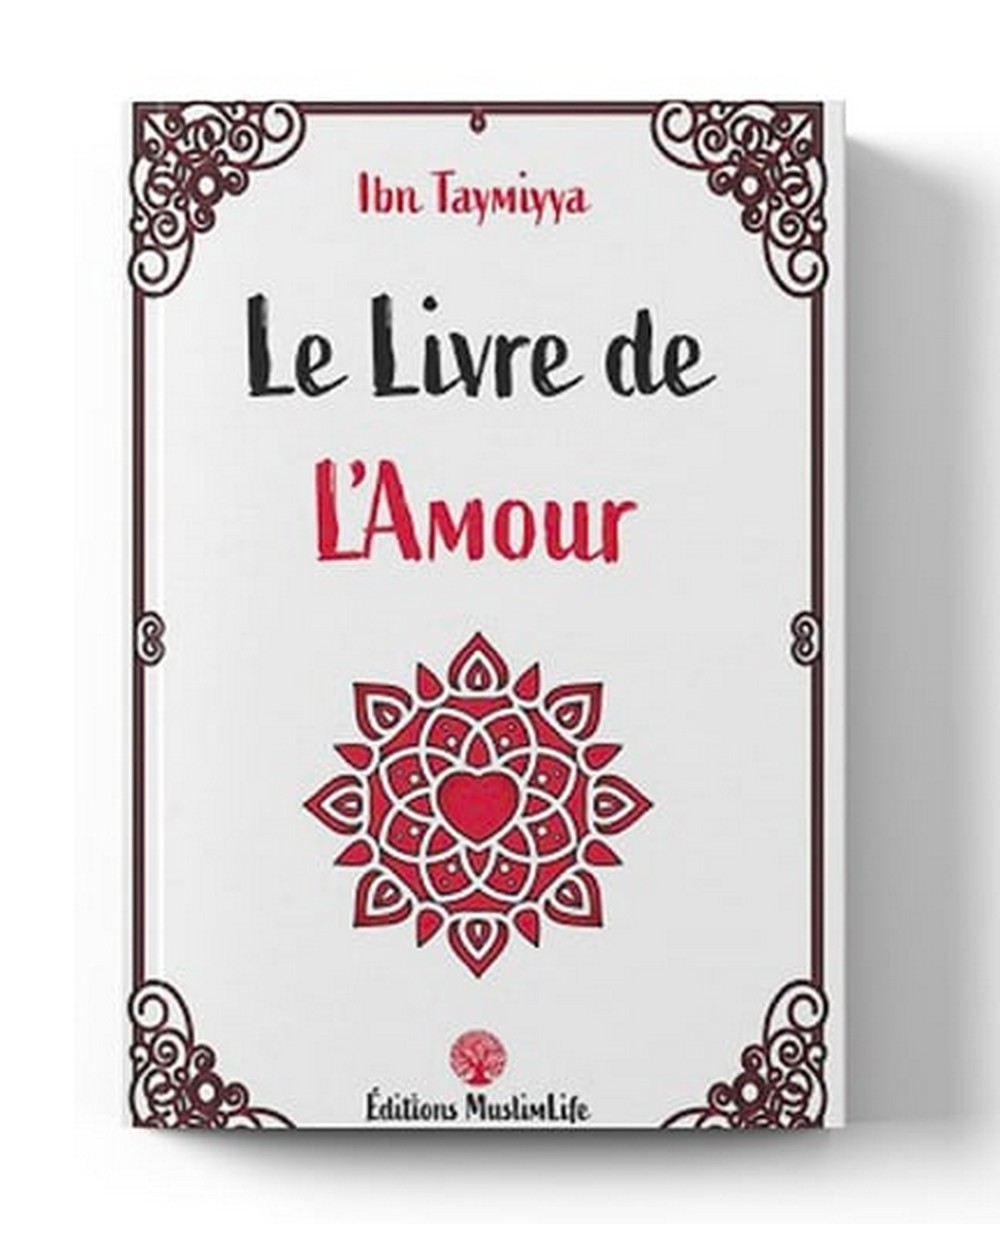 Le livre de l'Amour - Ibn Taymiyya - Edition Muslimlife